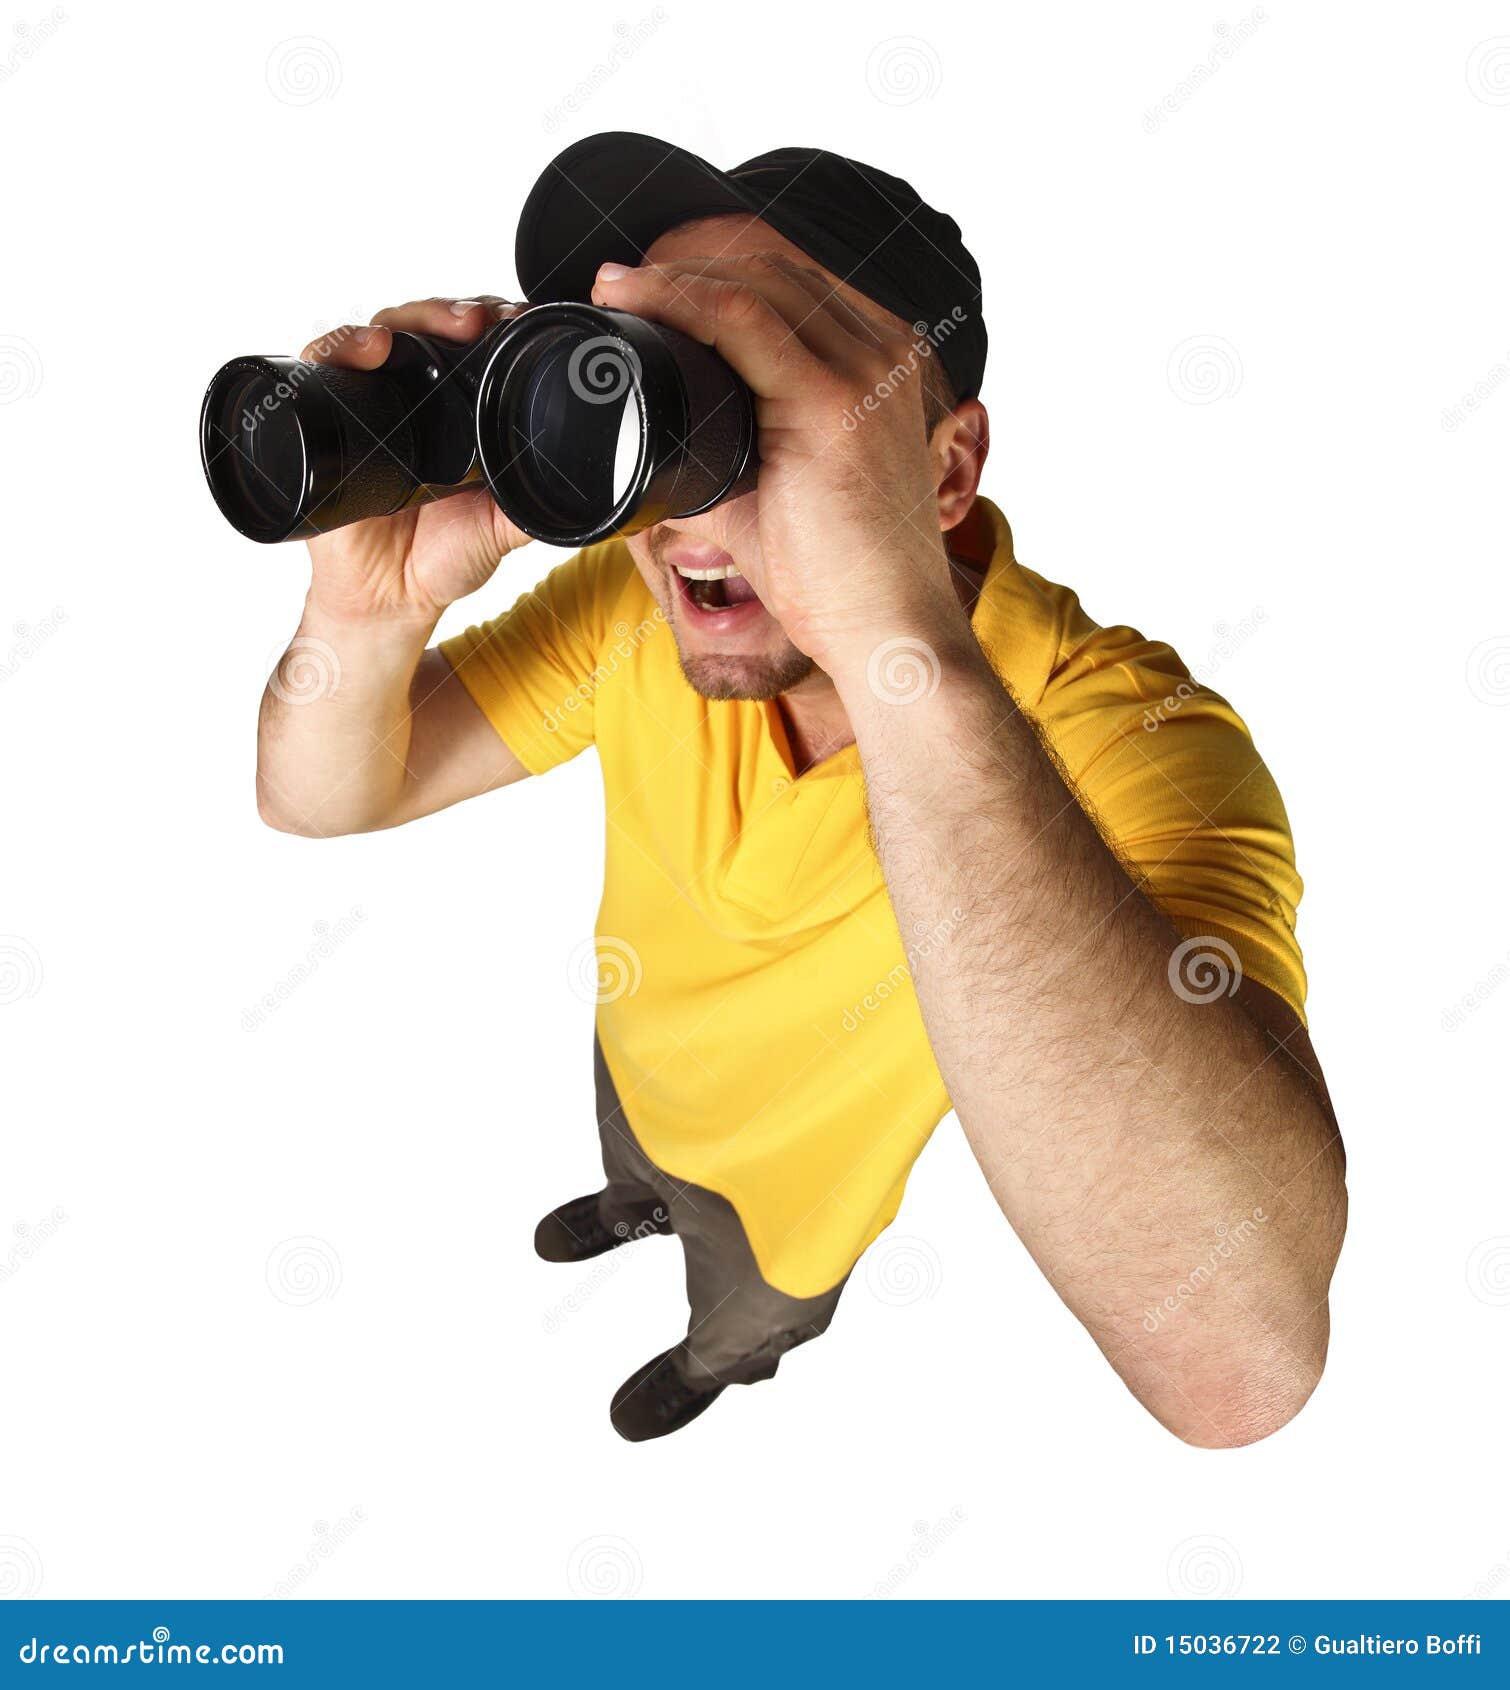 funny man with binoculars